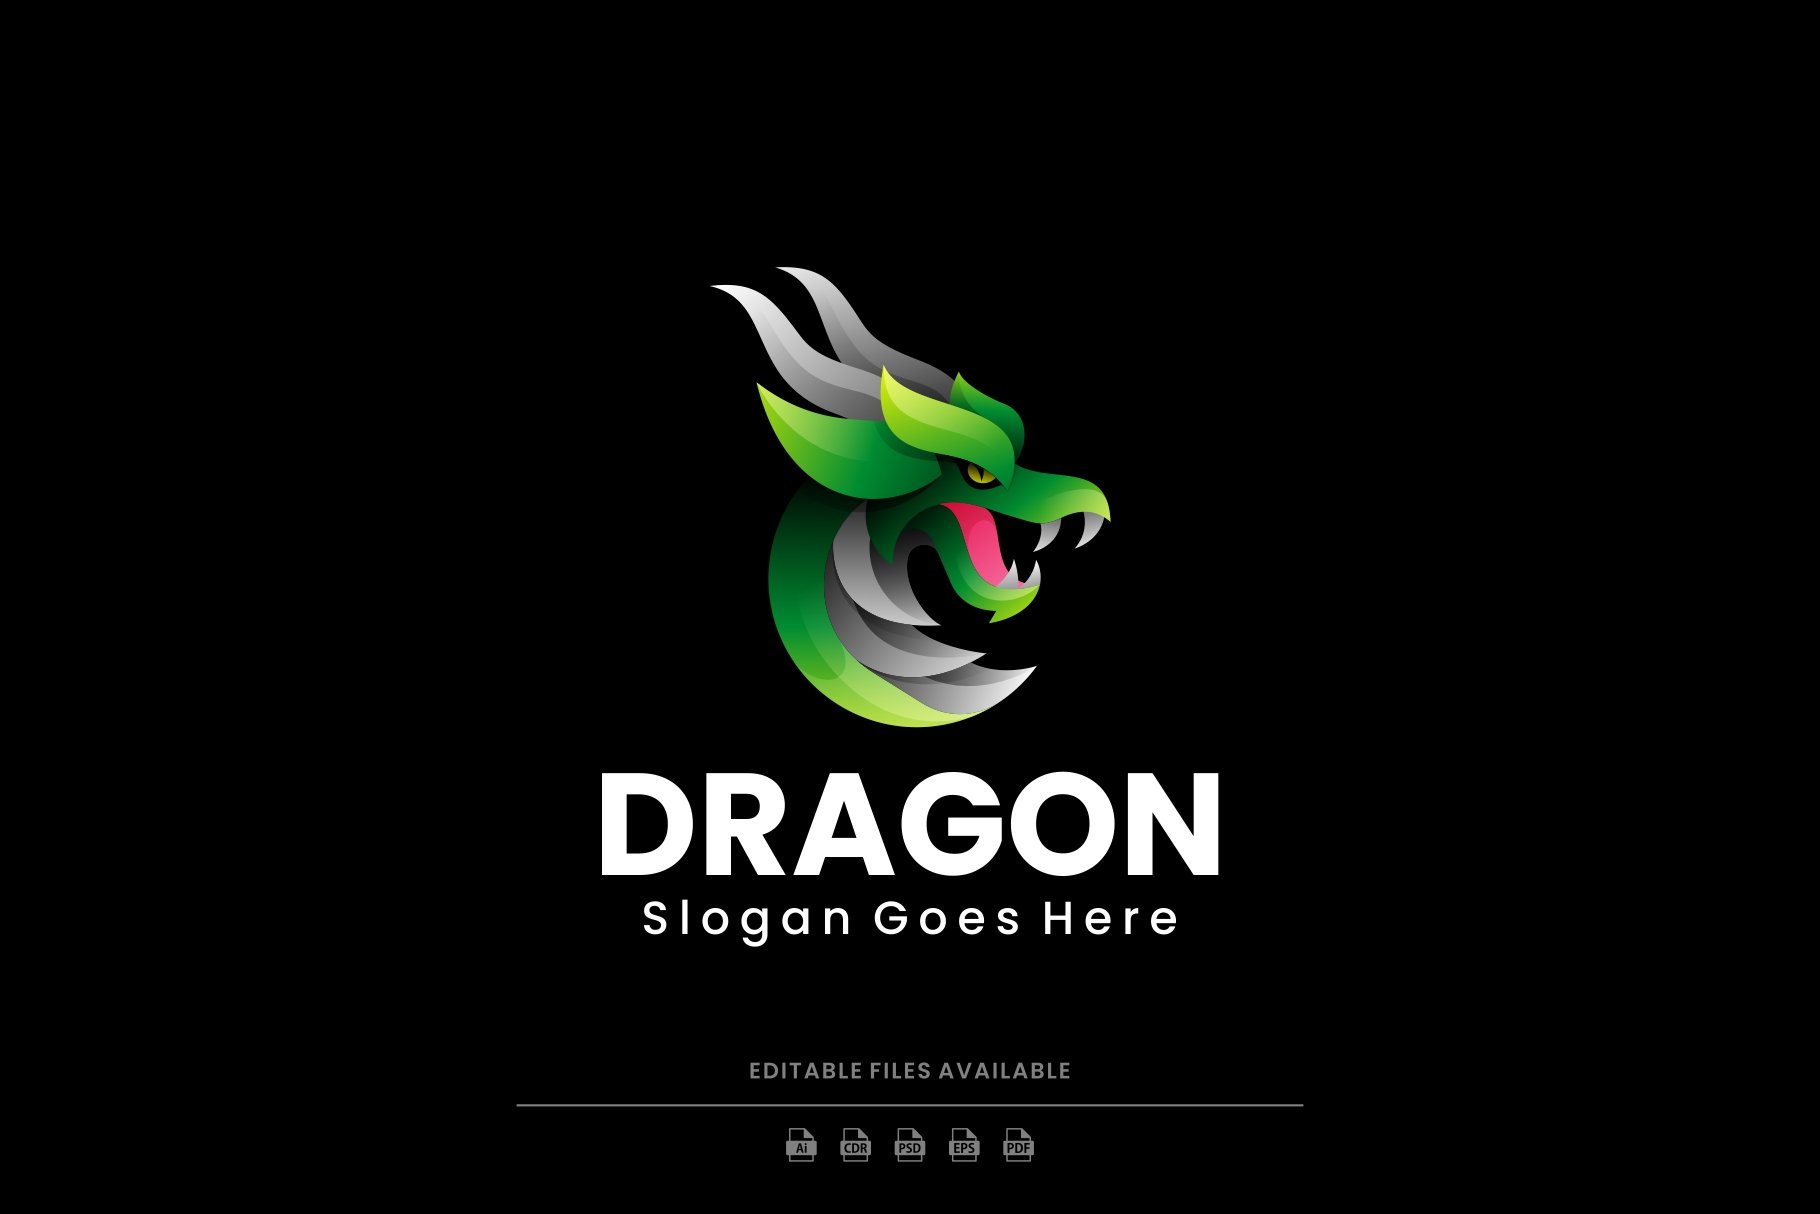 Dragon Colorful Logo cover image.